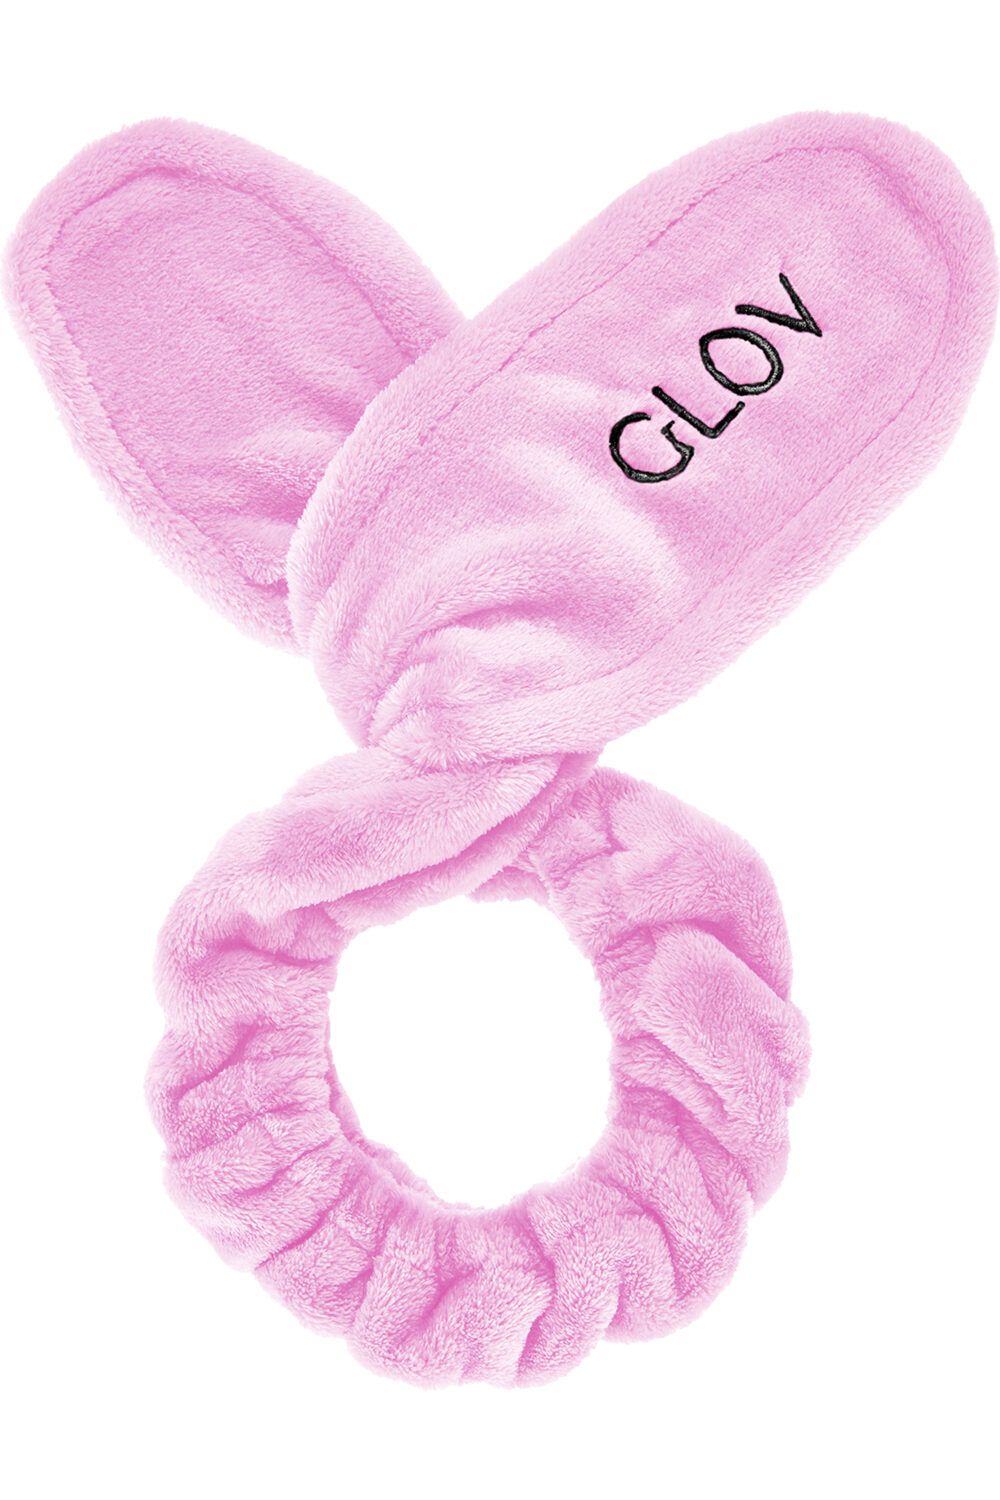 GLOV - Serre-tête Bunny Ears Rose